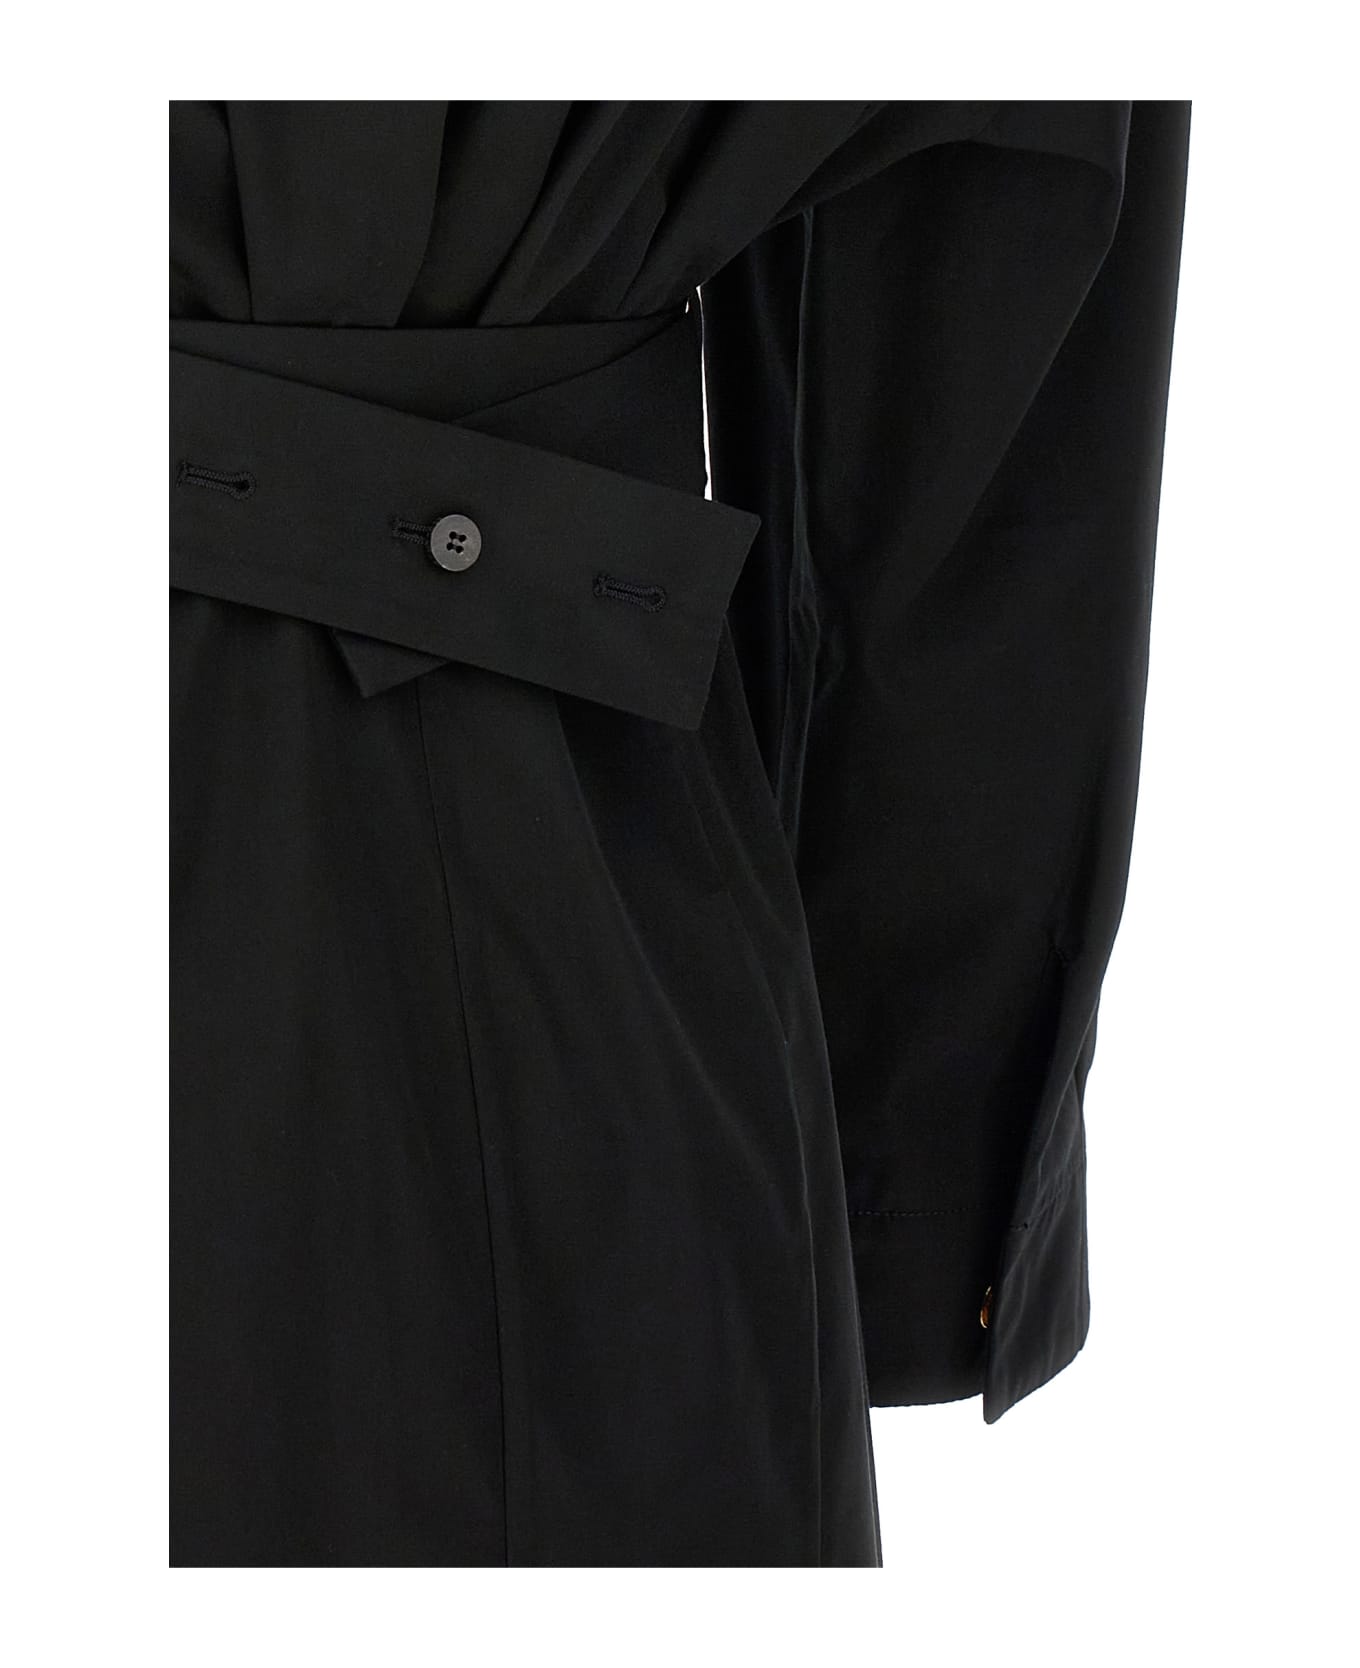 Jacquemus 'la Robe Chemise' Dress - Black   コート